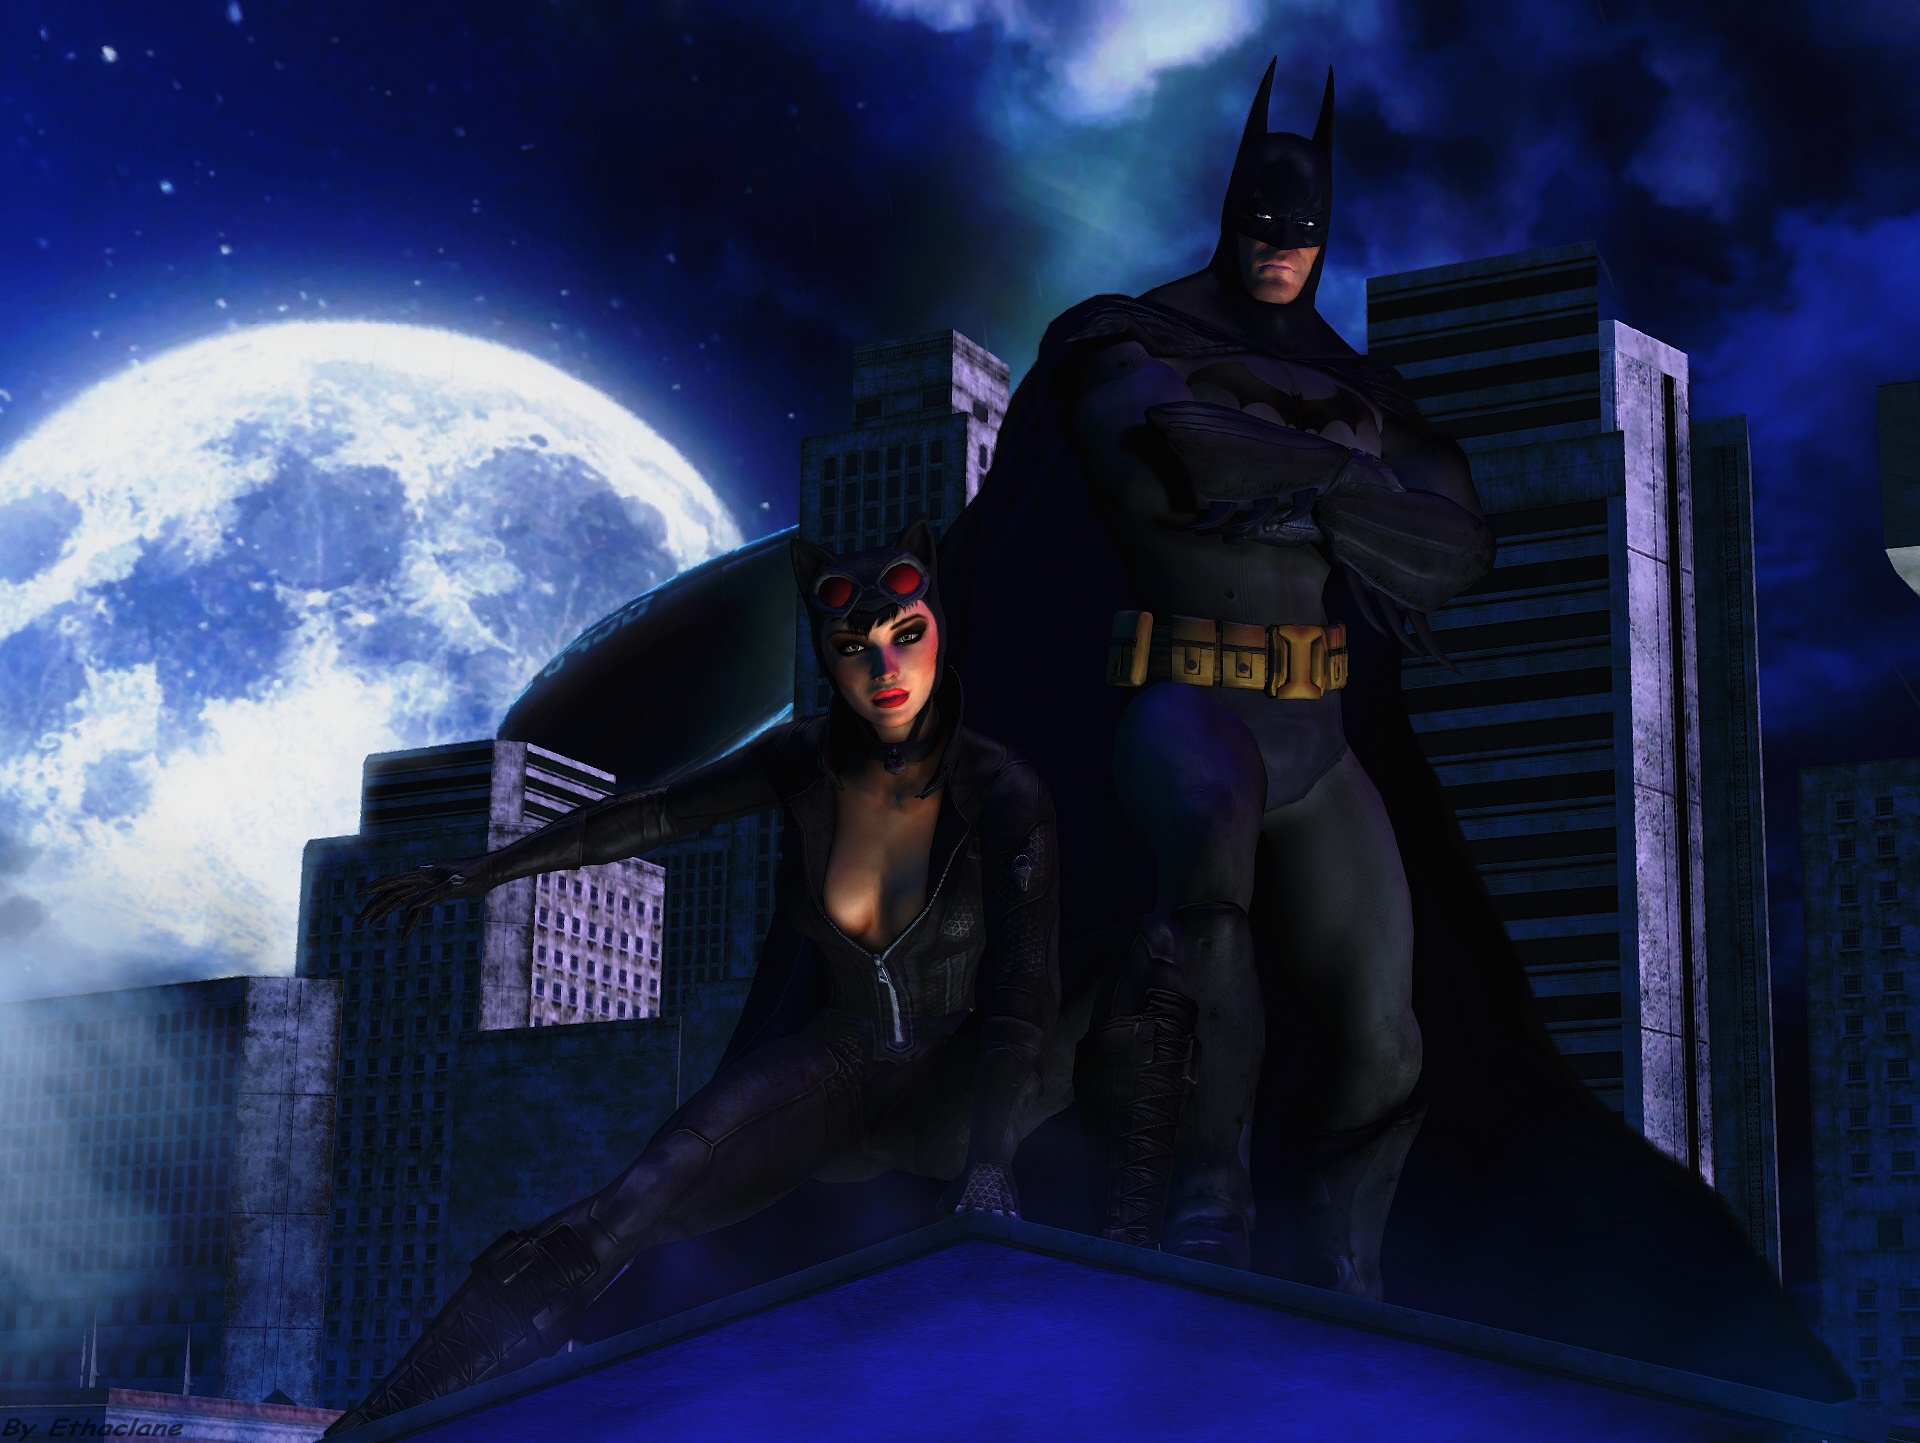 Batman: Arkham City Wallpapers